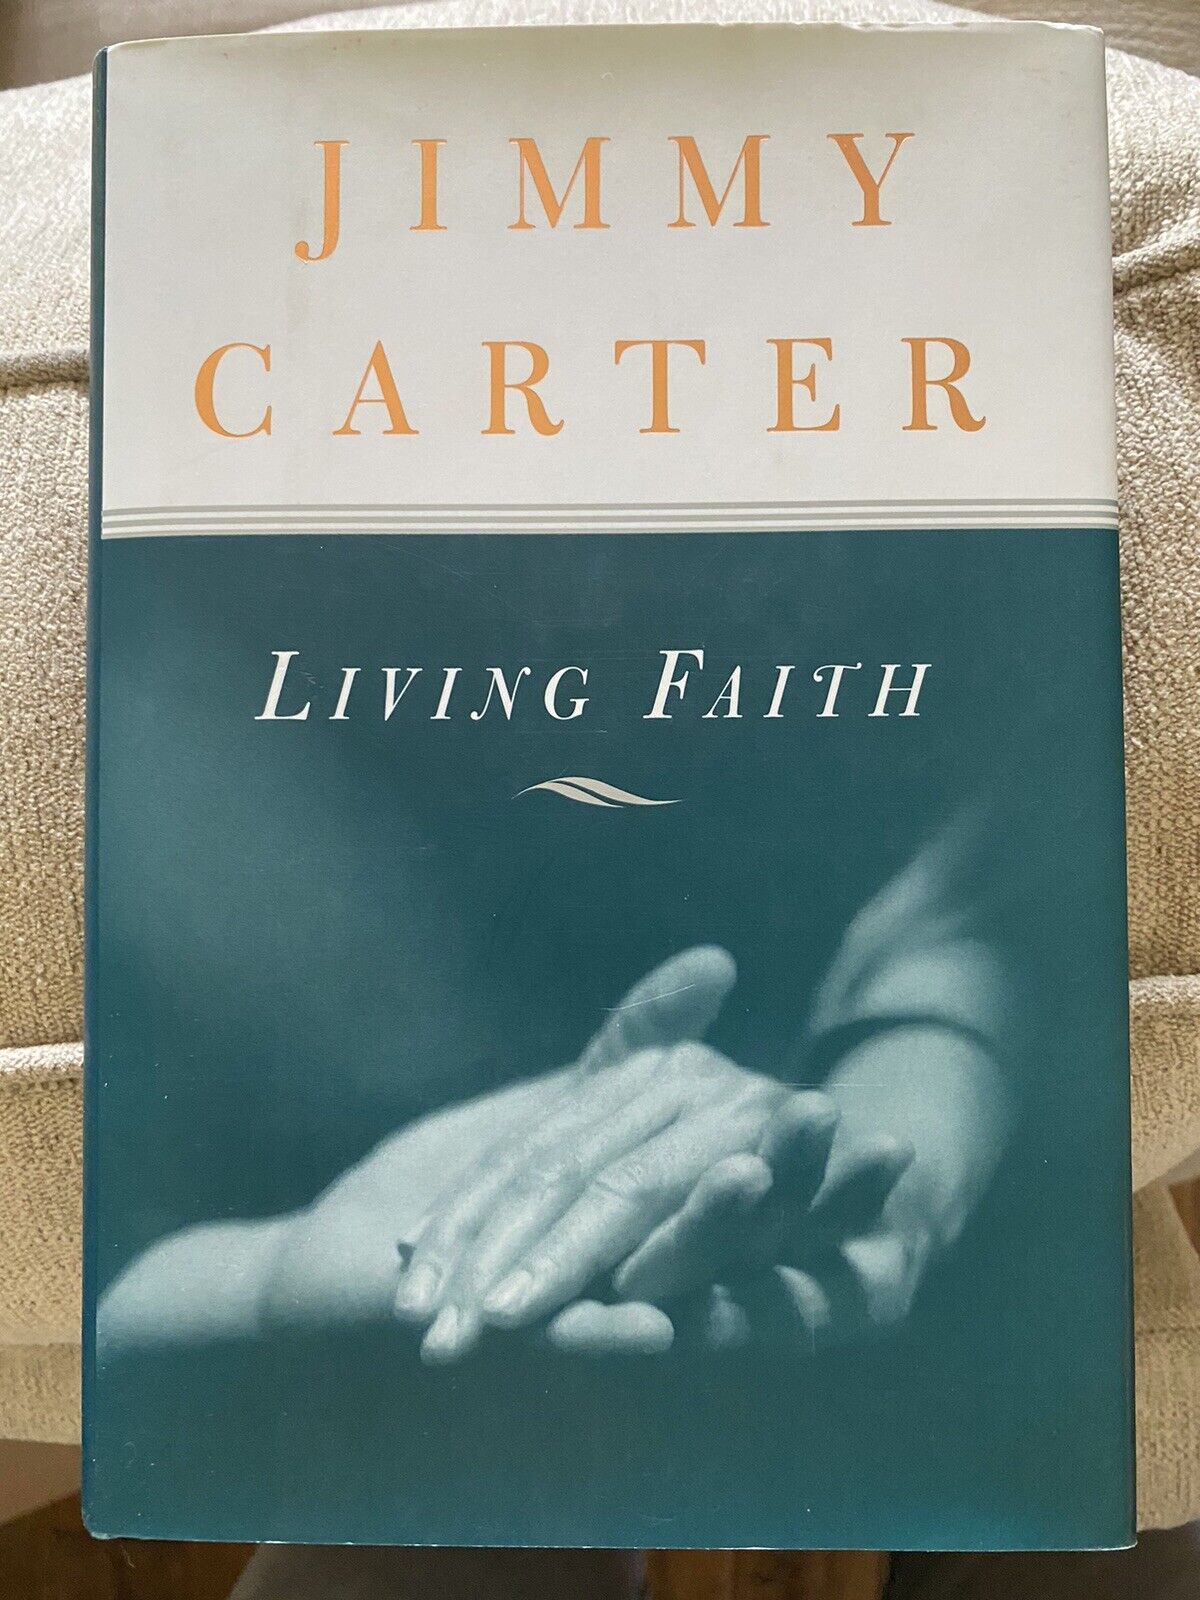 jimmy carter living faith signed